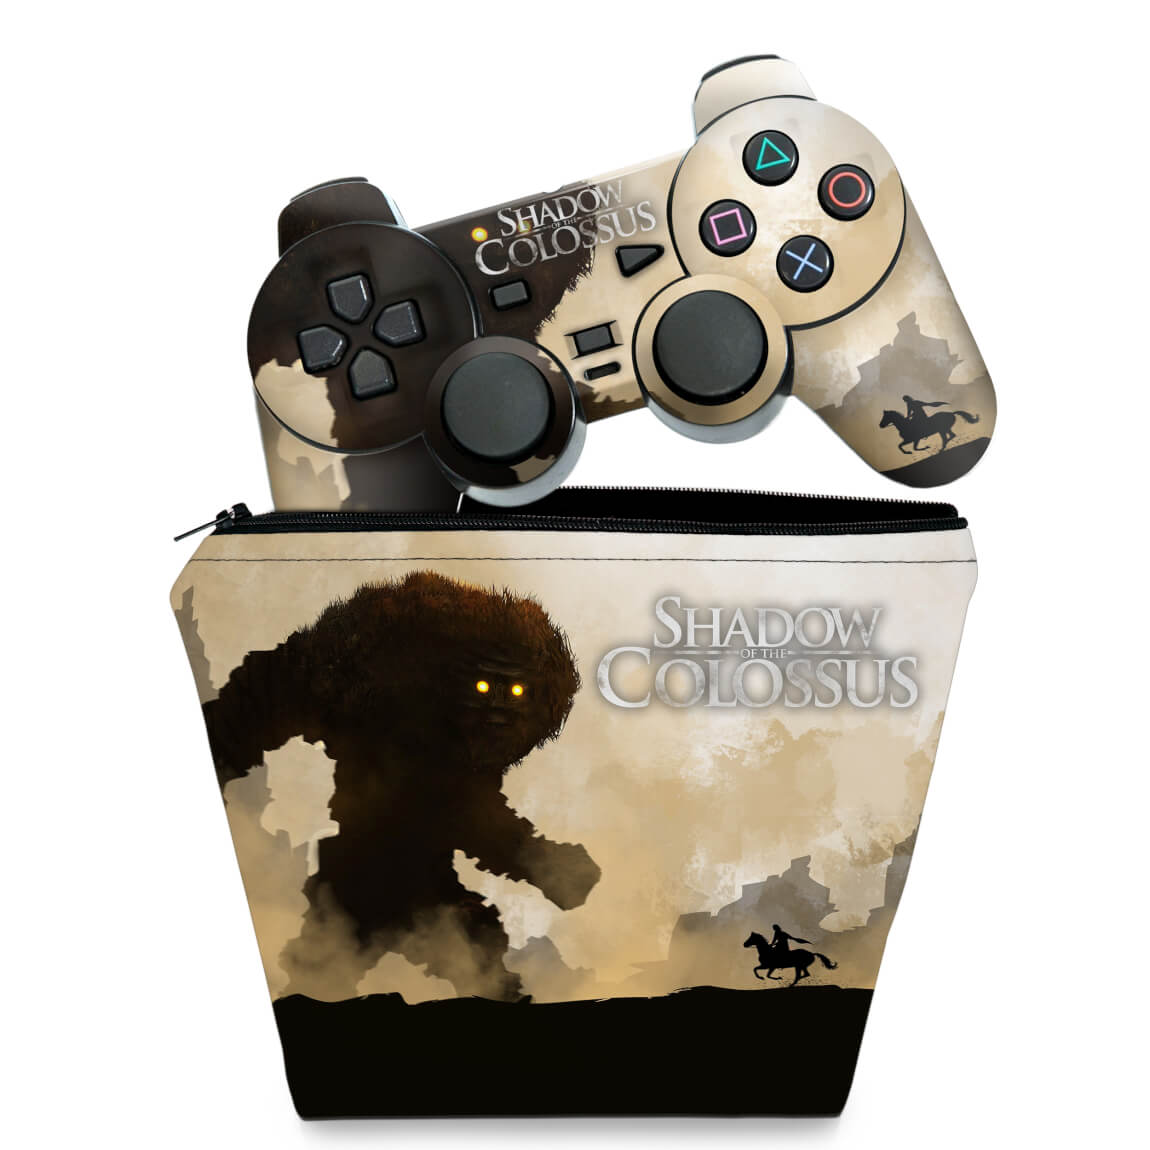 Adesivo Compatível PS5 Controle Playstation 5 Skin - God Of War